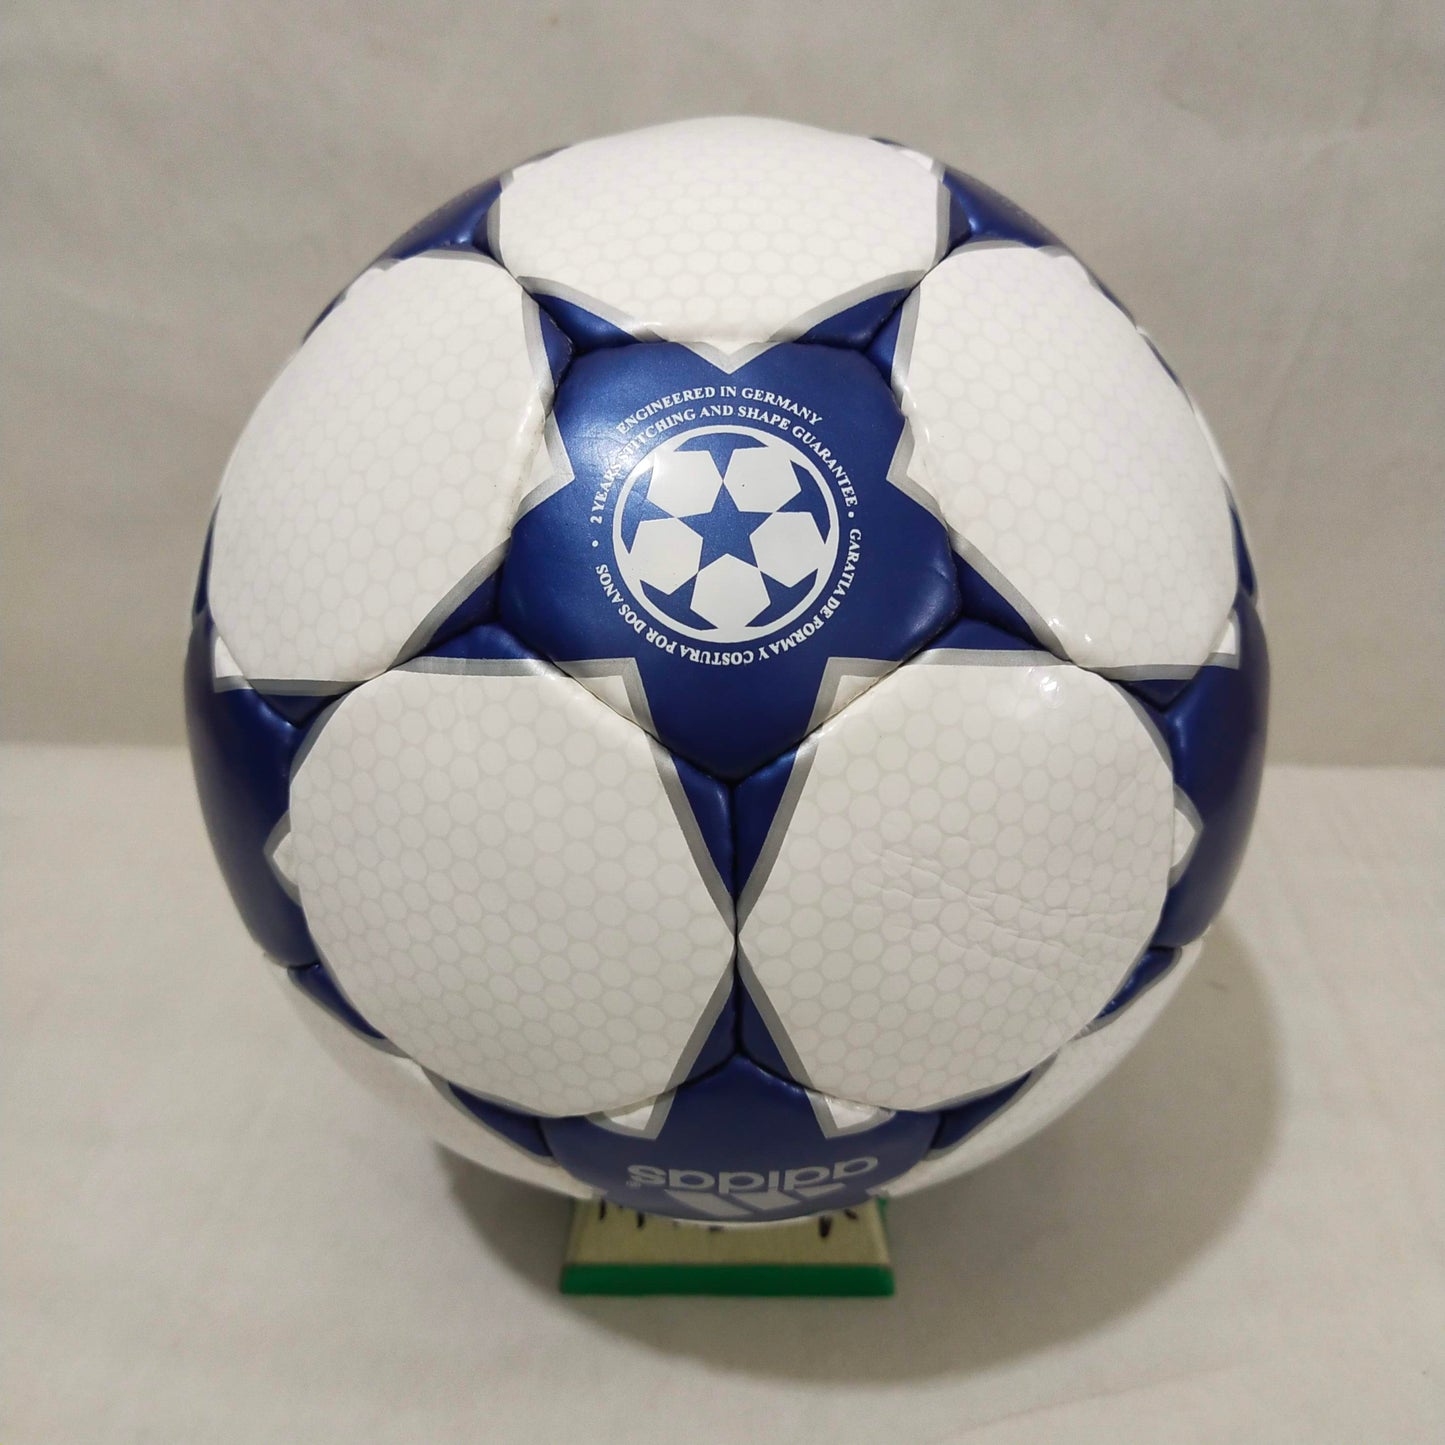 Adidas Finale 3 | 2003-2004 | UEFA Champions League Ball | Size 5 05